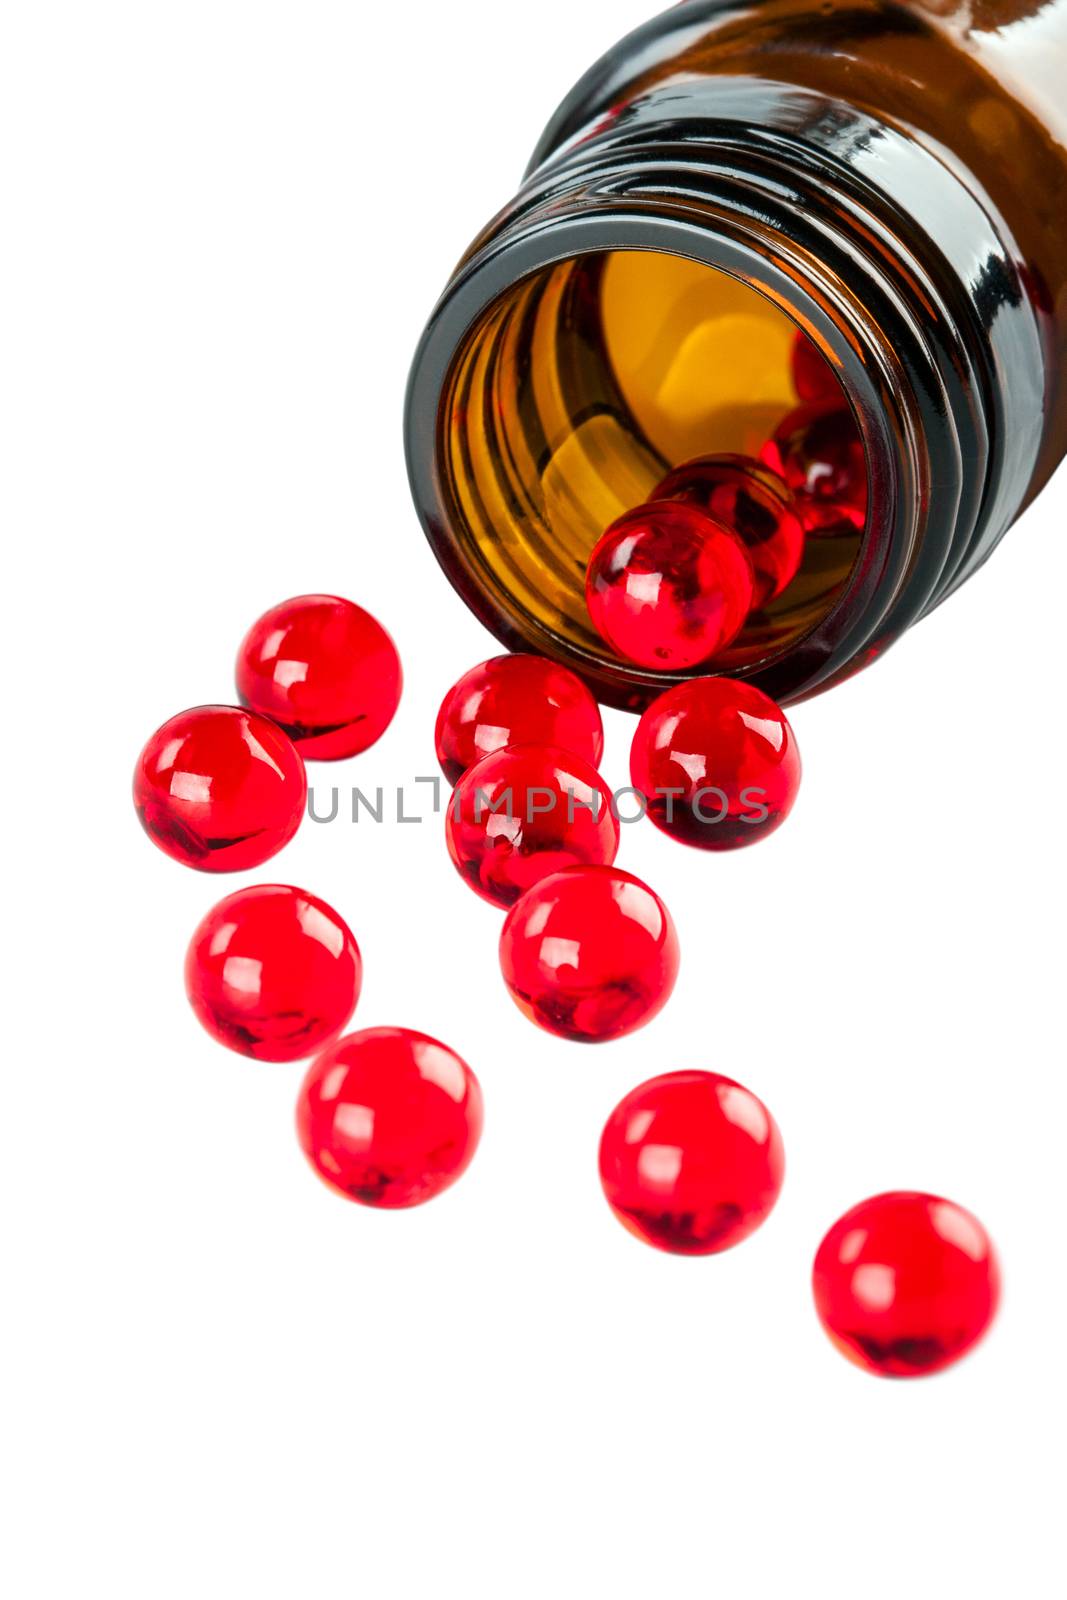 Red capsules by abelikov